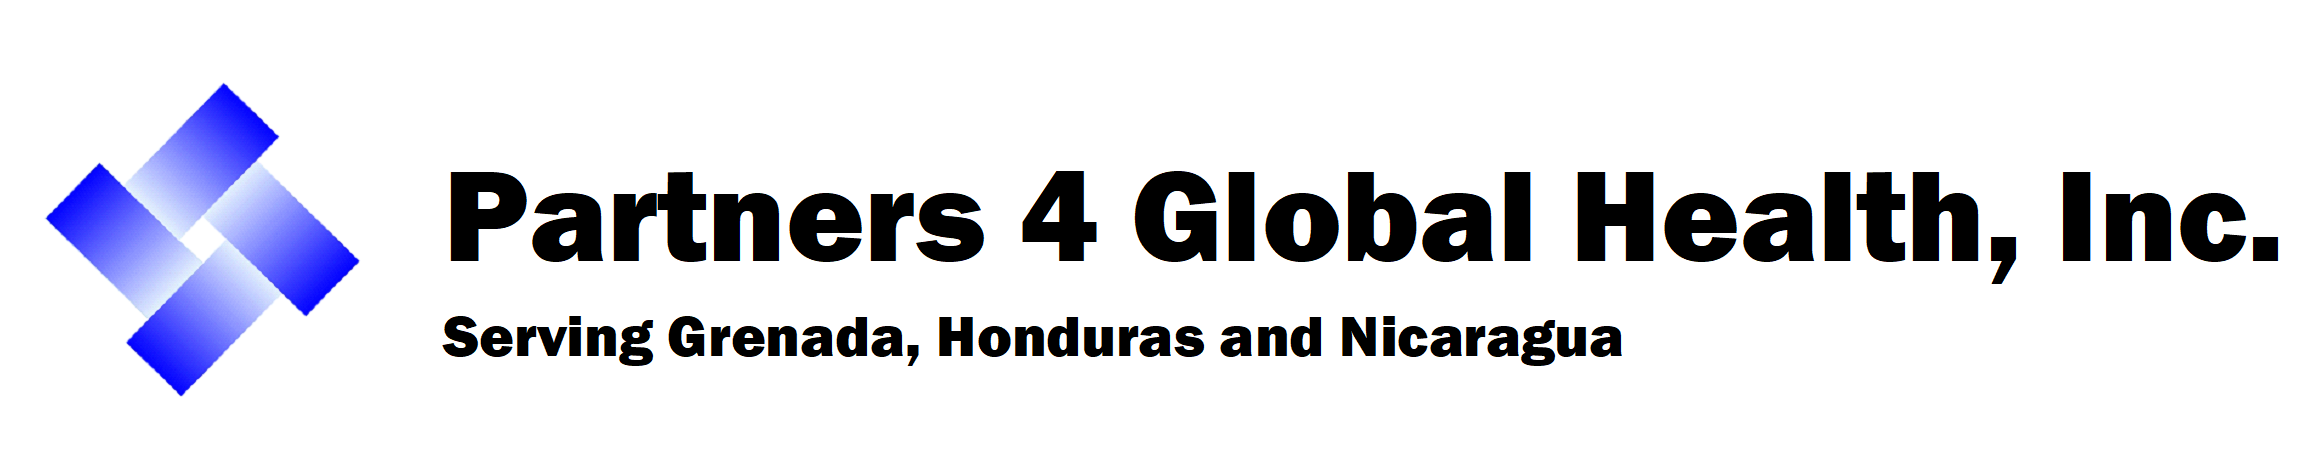 Partners 4 Global Health, Inc.